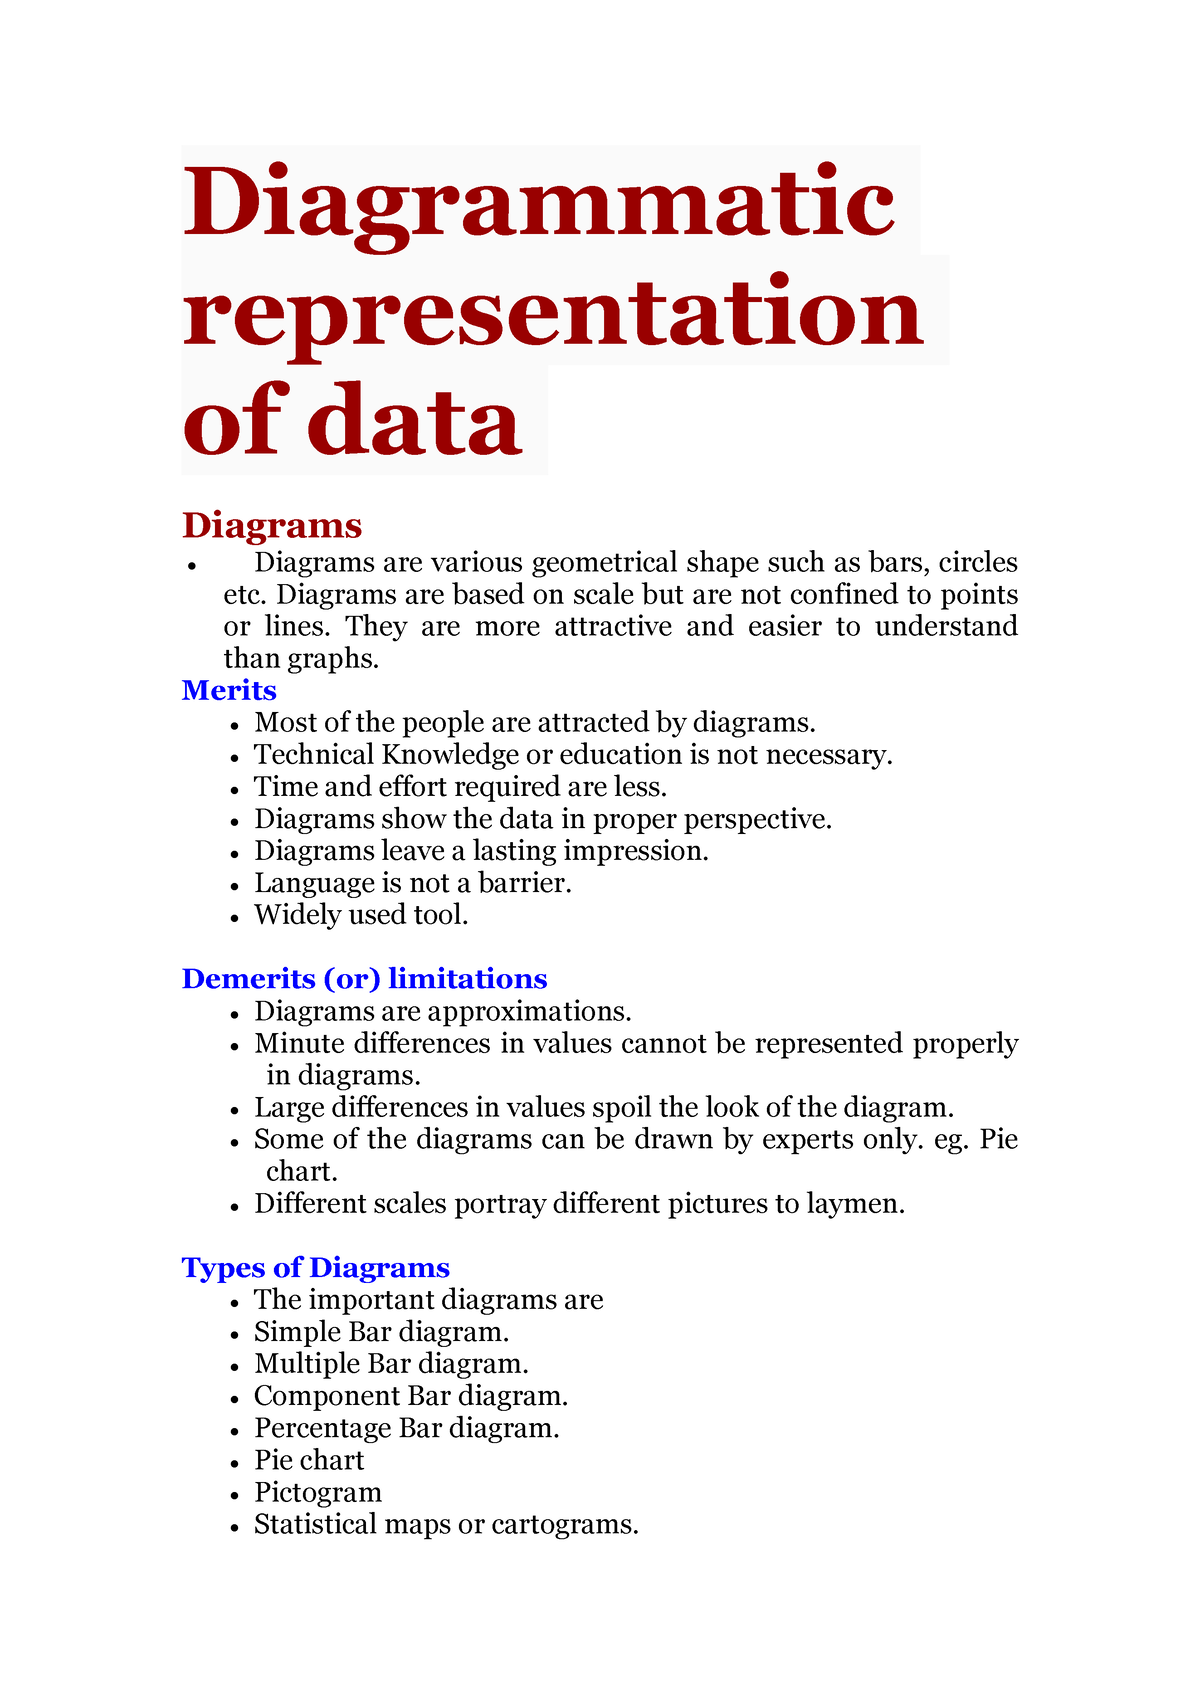 importance of diagrammatic representation of data